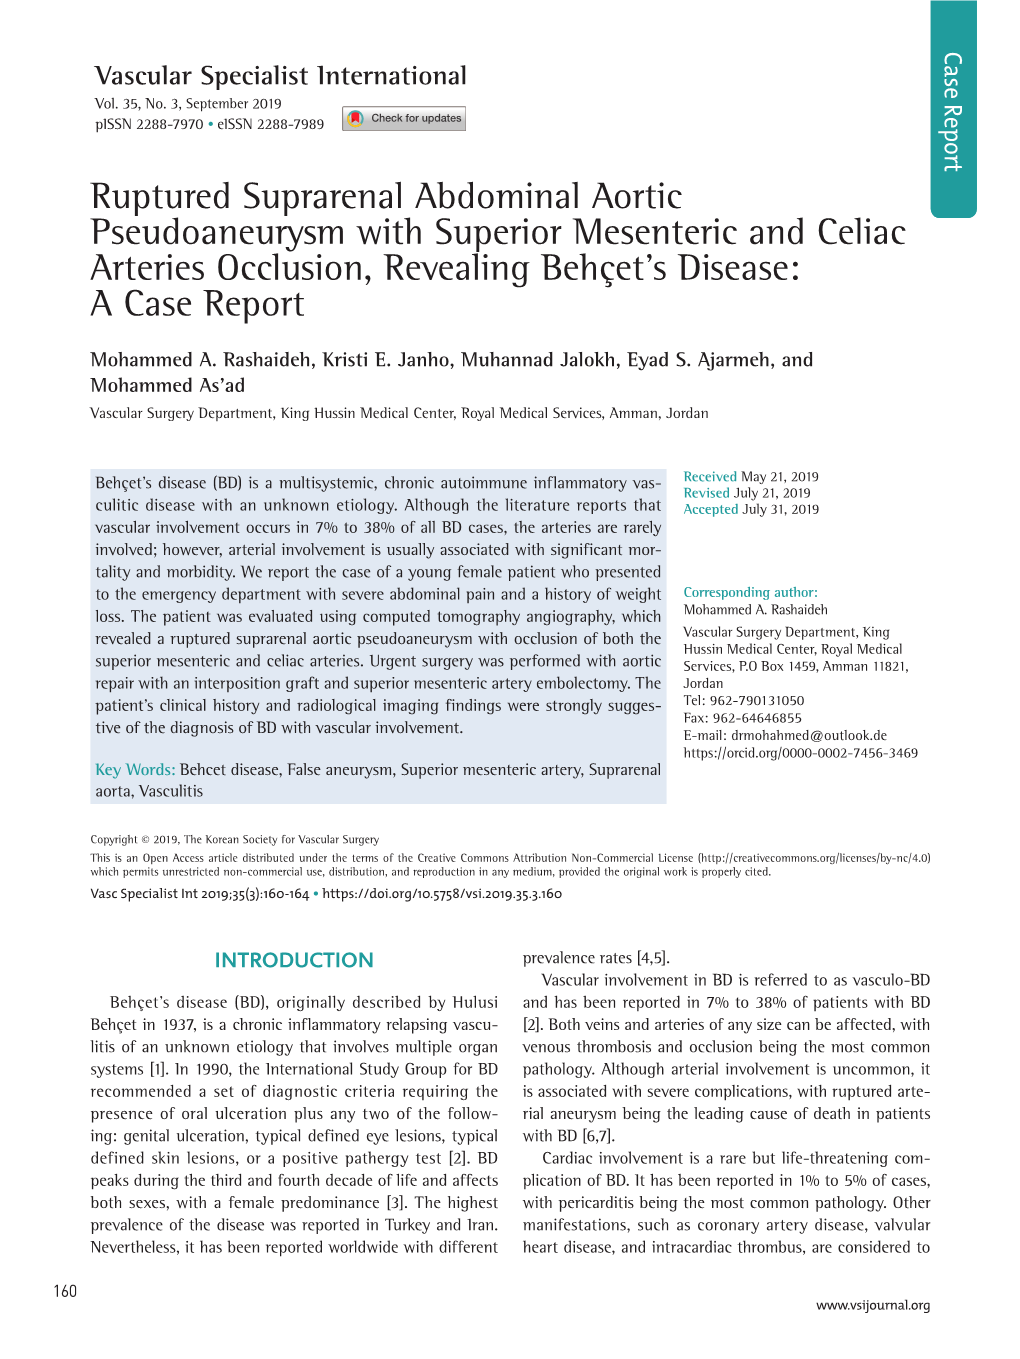 Ruptured Suprarenal Abdominal Aortic Pseudoaneurysm with Superior Mesenteric and Celiac Arteries Occlusion, Revealing Behçet’S Disease: a Case Report